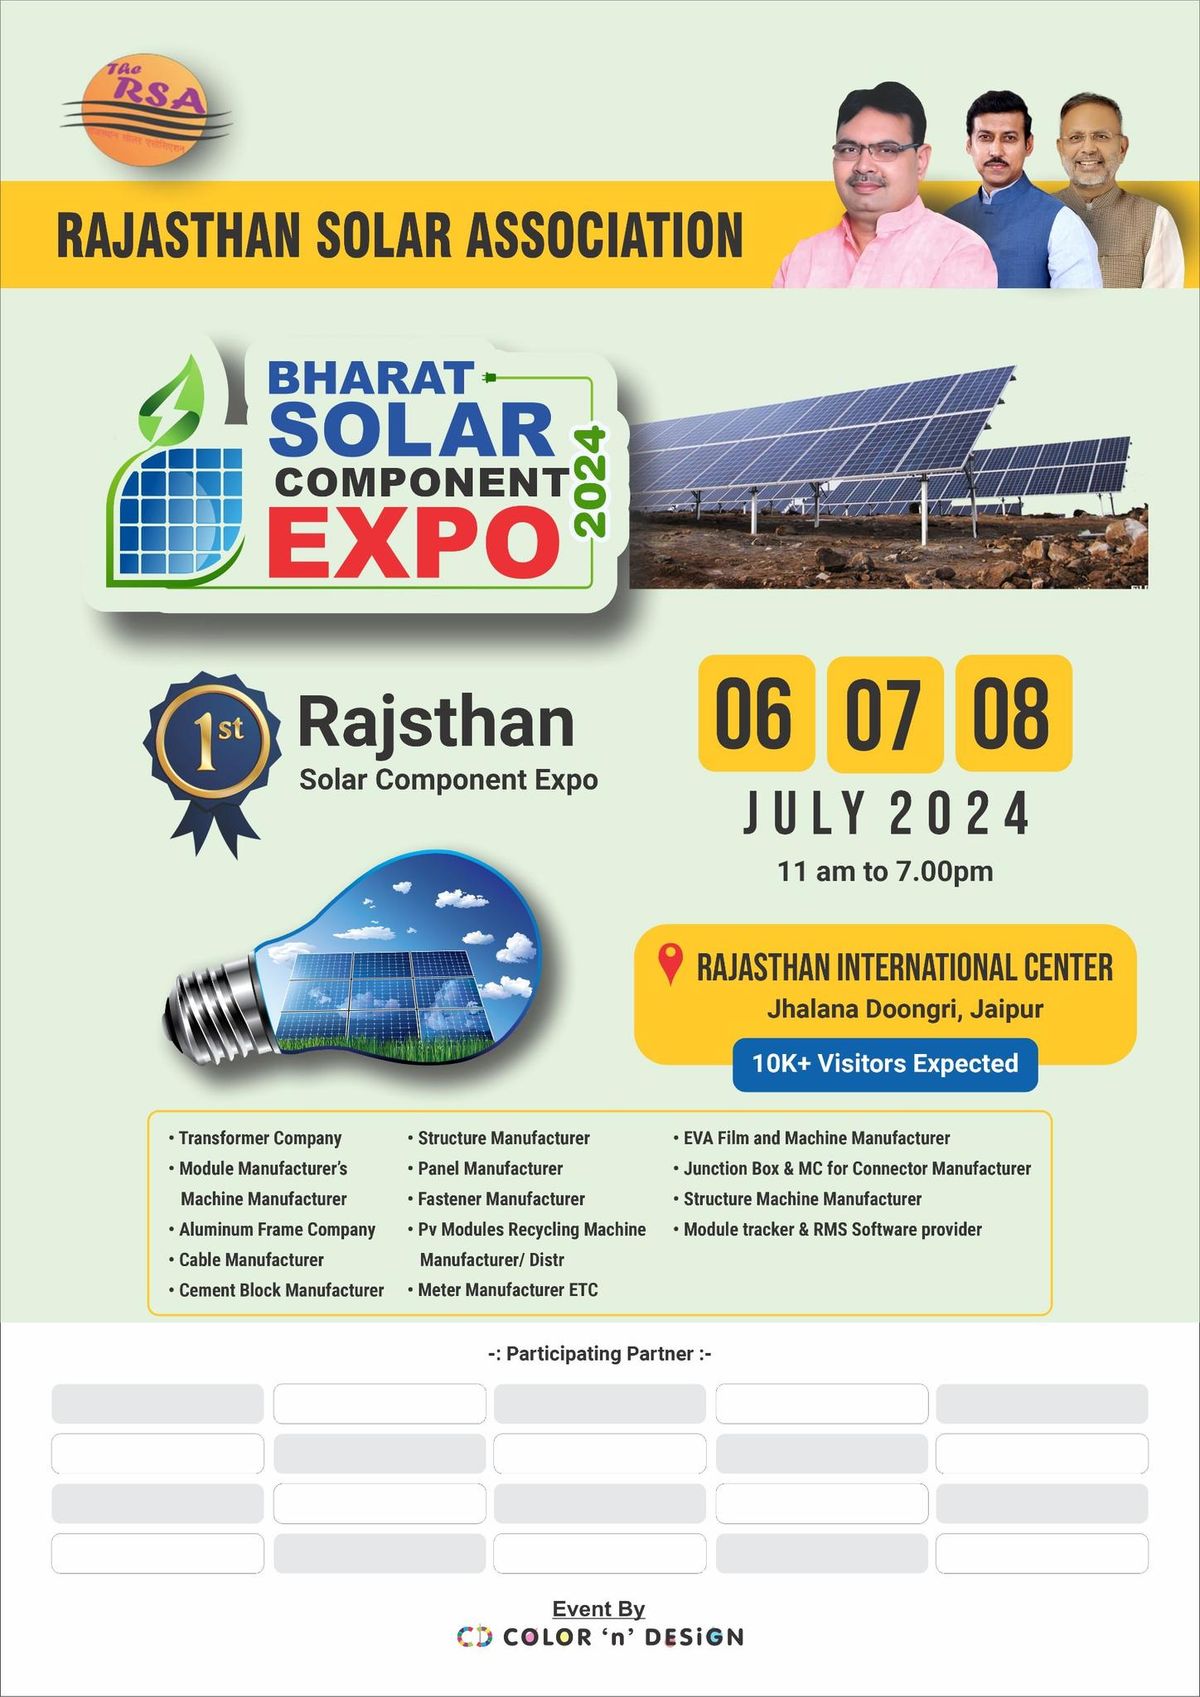 BHARAT SOLAR COMPONENT EXPO 2024